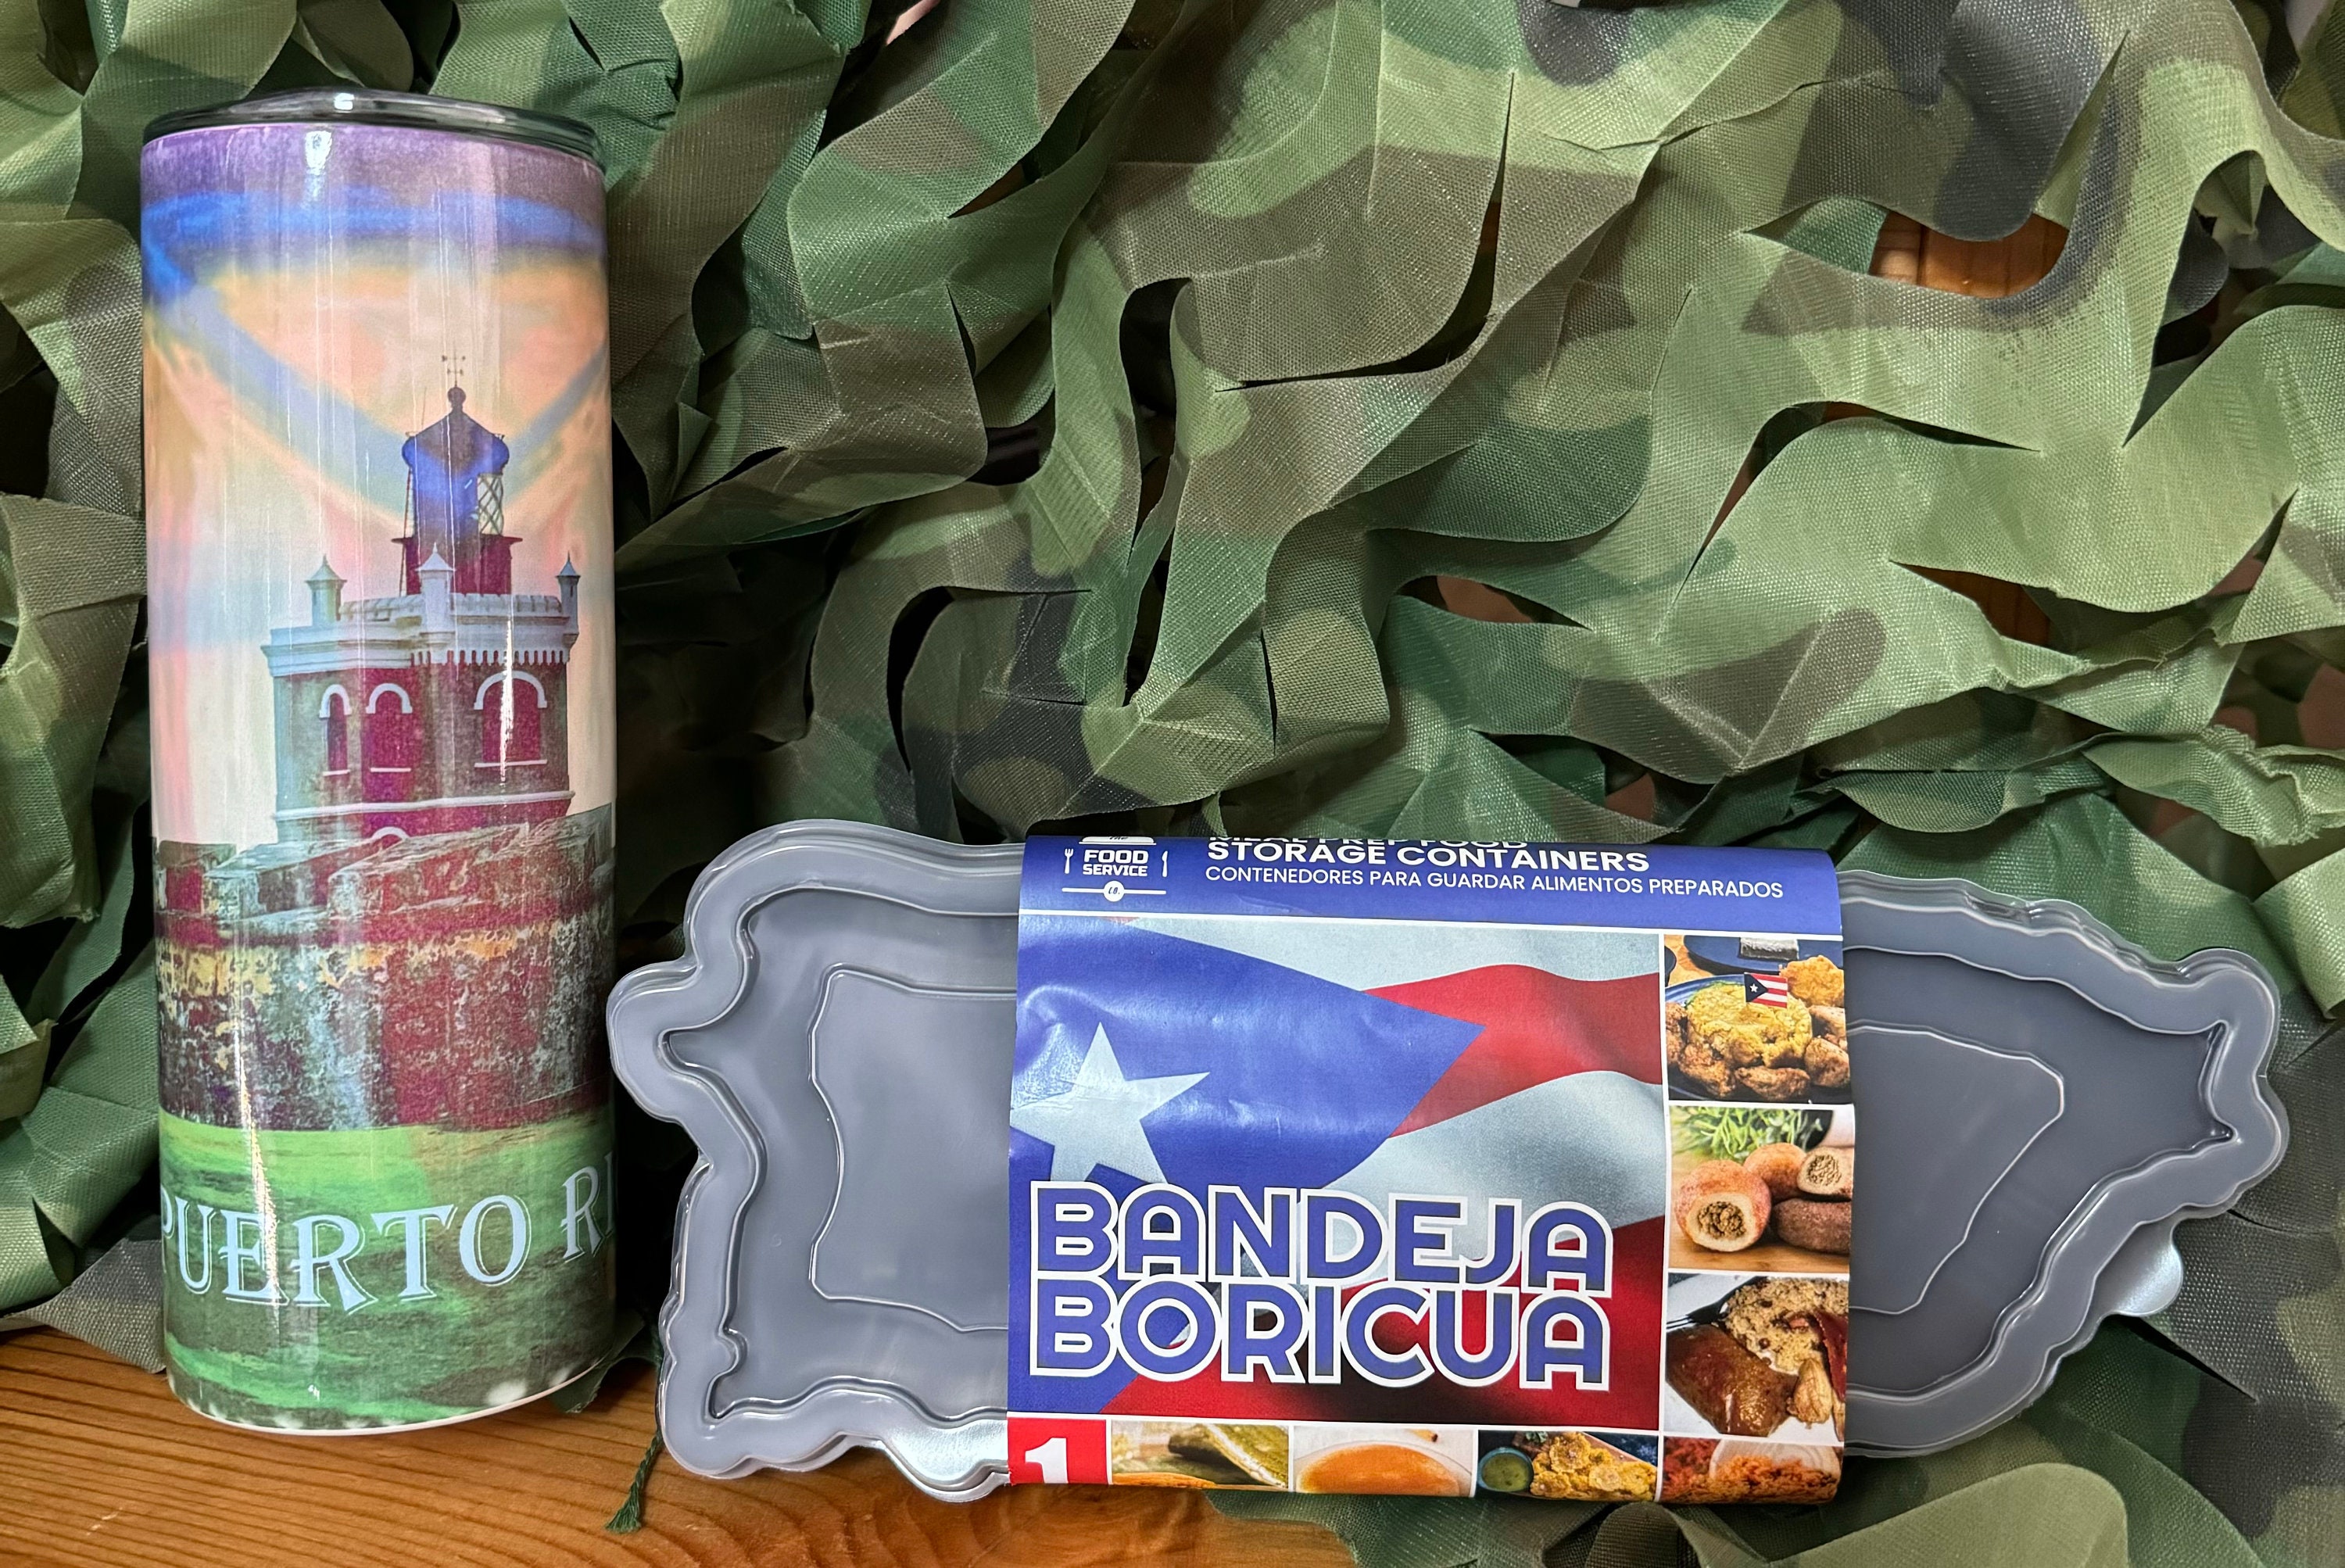 Bandeja Boricua - Puerto Rico Shaped Storage Container on Sale 